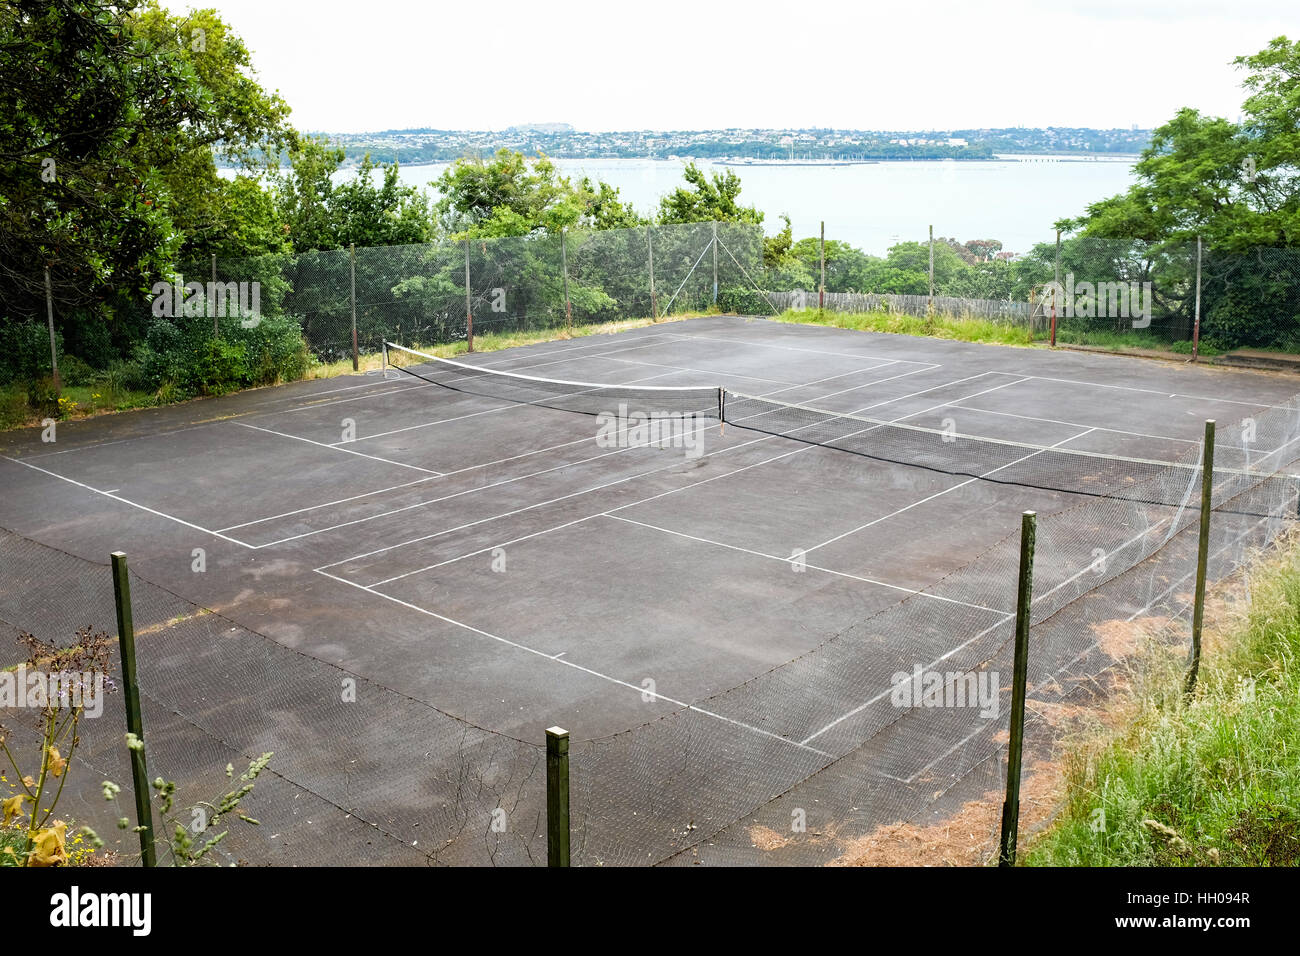 Empty tennis courts. Stock Photo